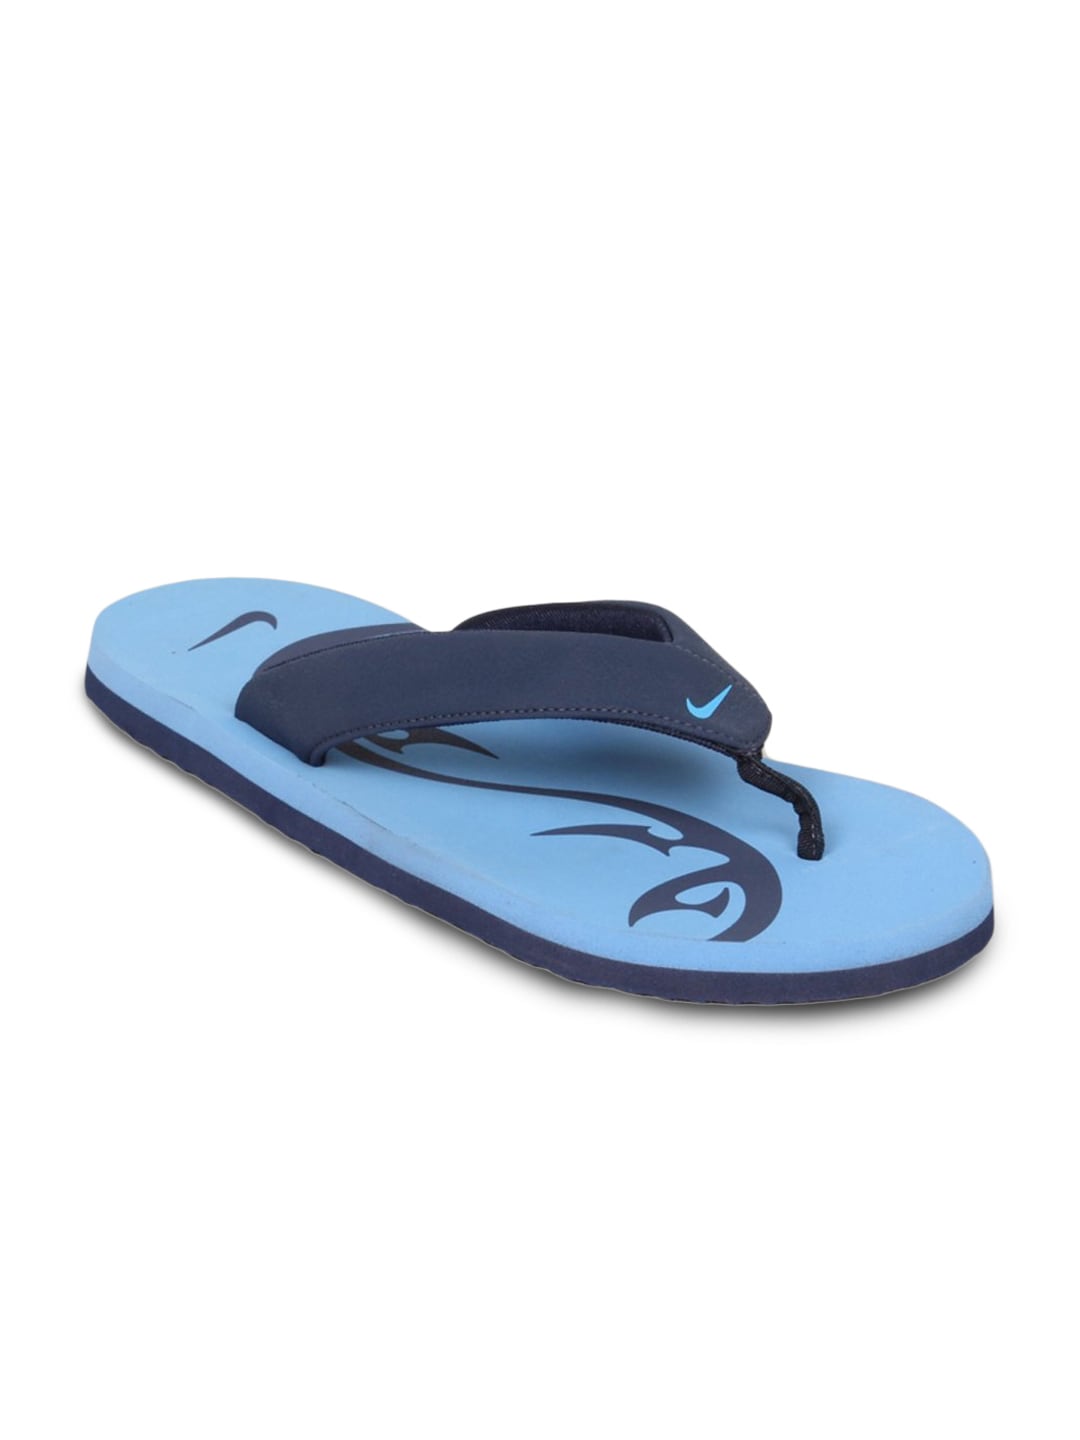 Nike Men's Splash Thong Blue Flip Flop